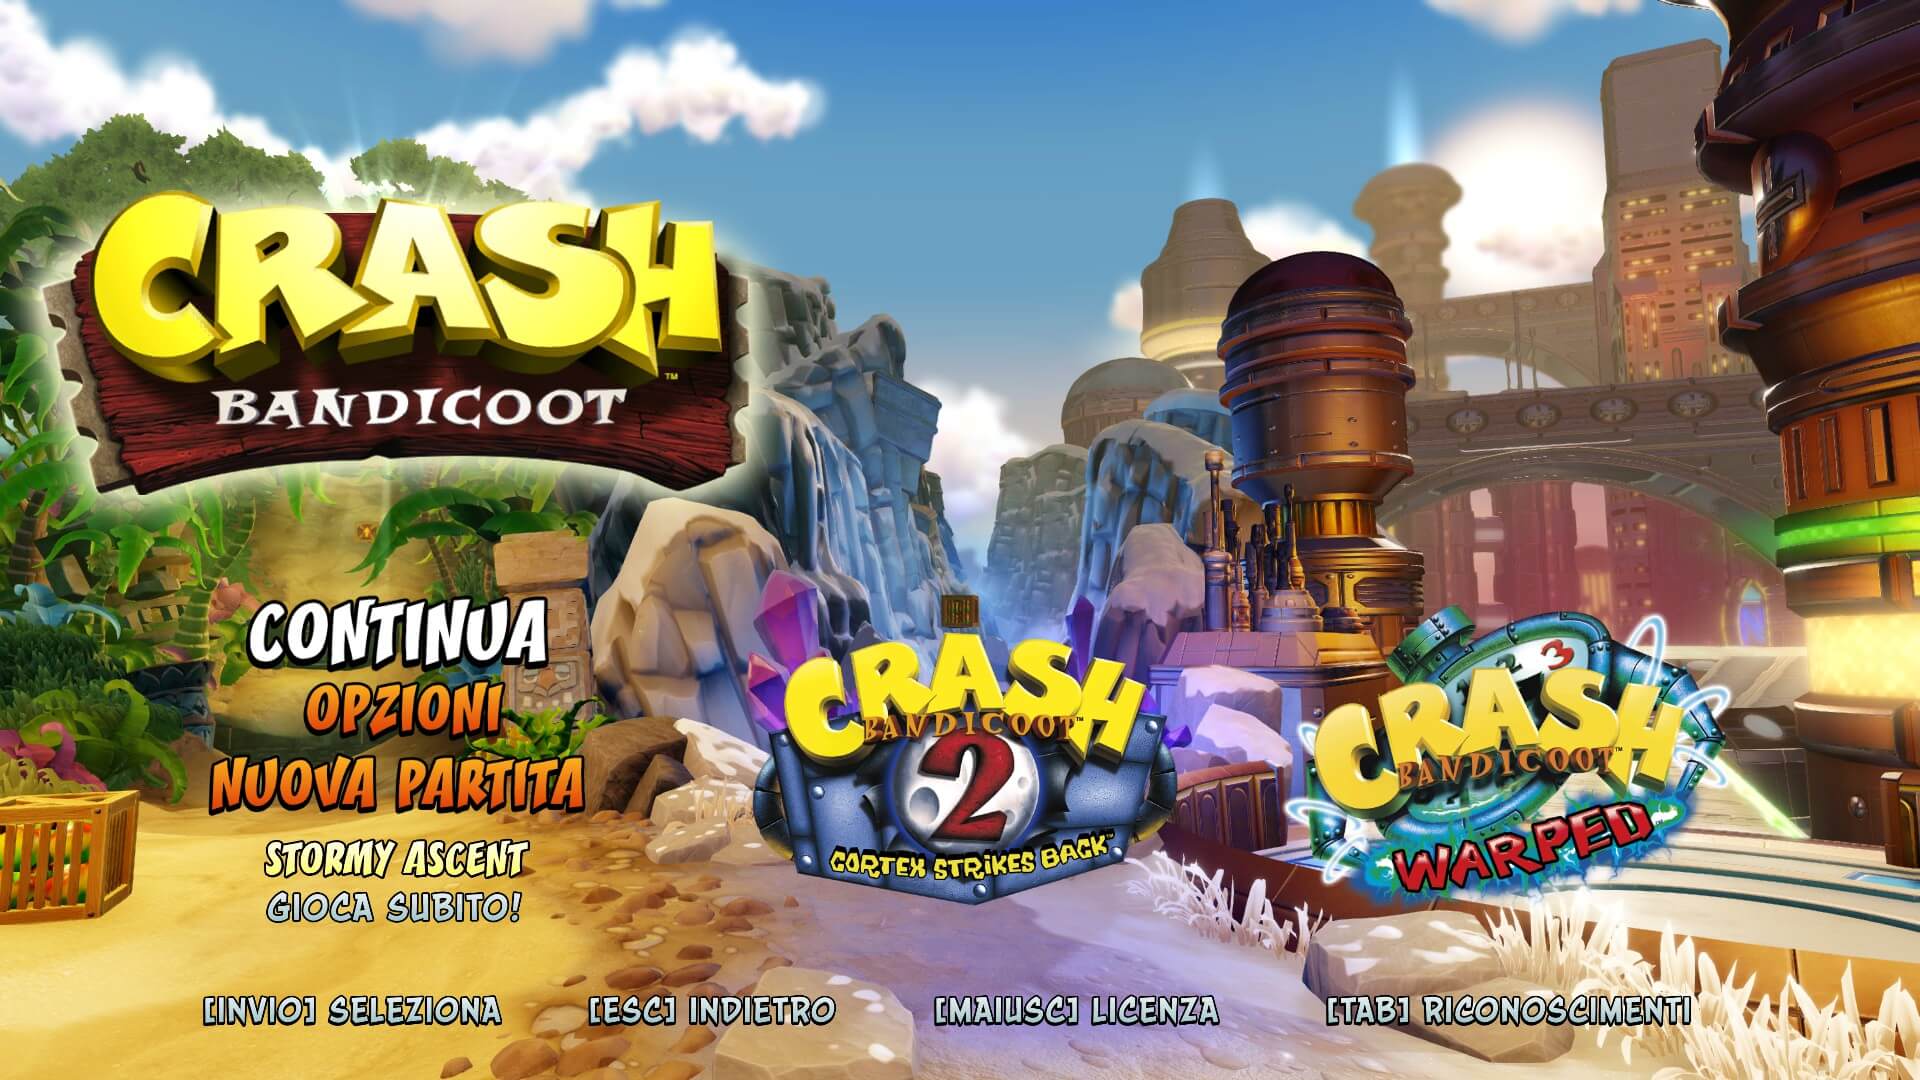 Crash Bandicoot trilogy coming to Nintendo Switch - Polygon